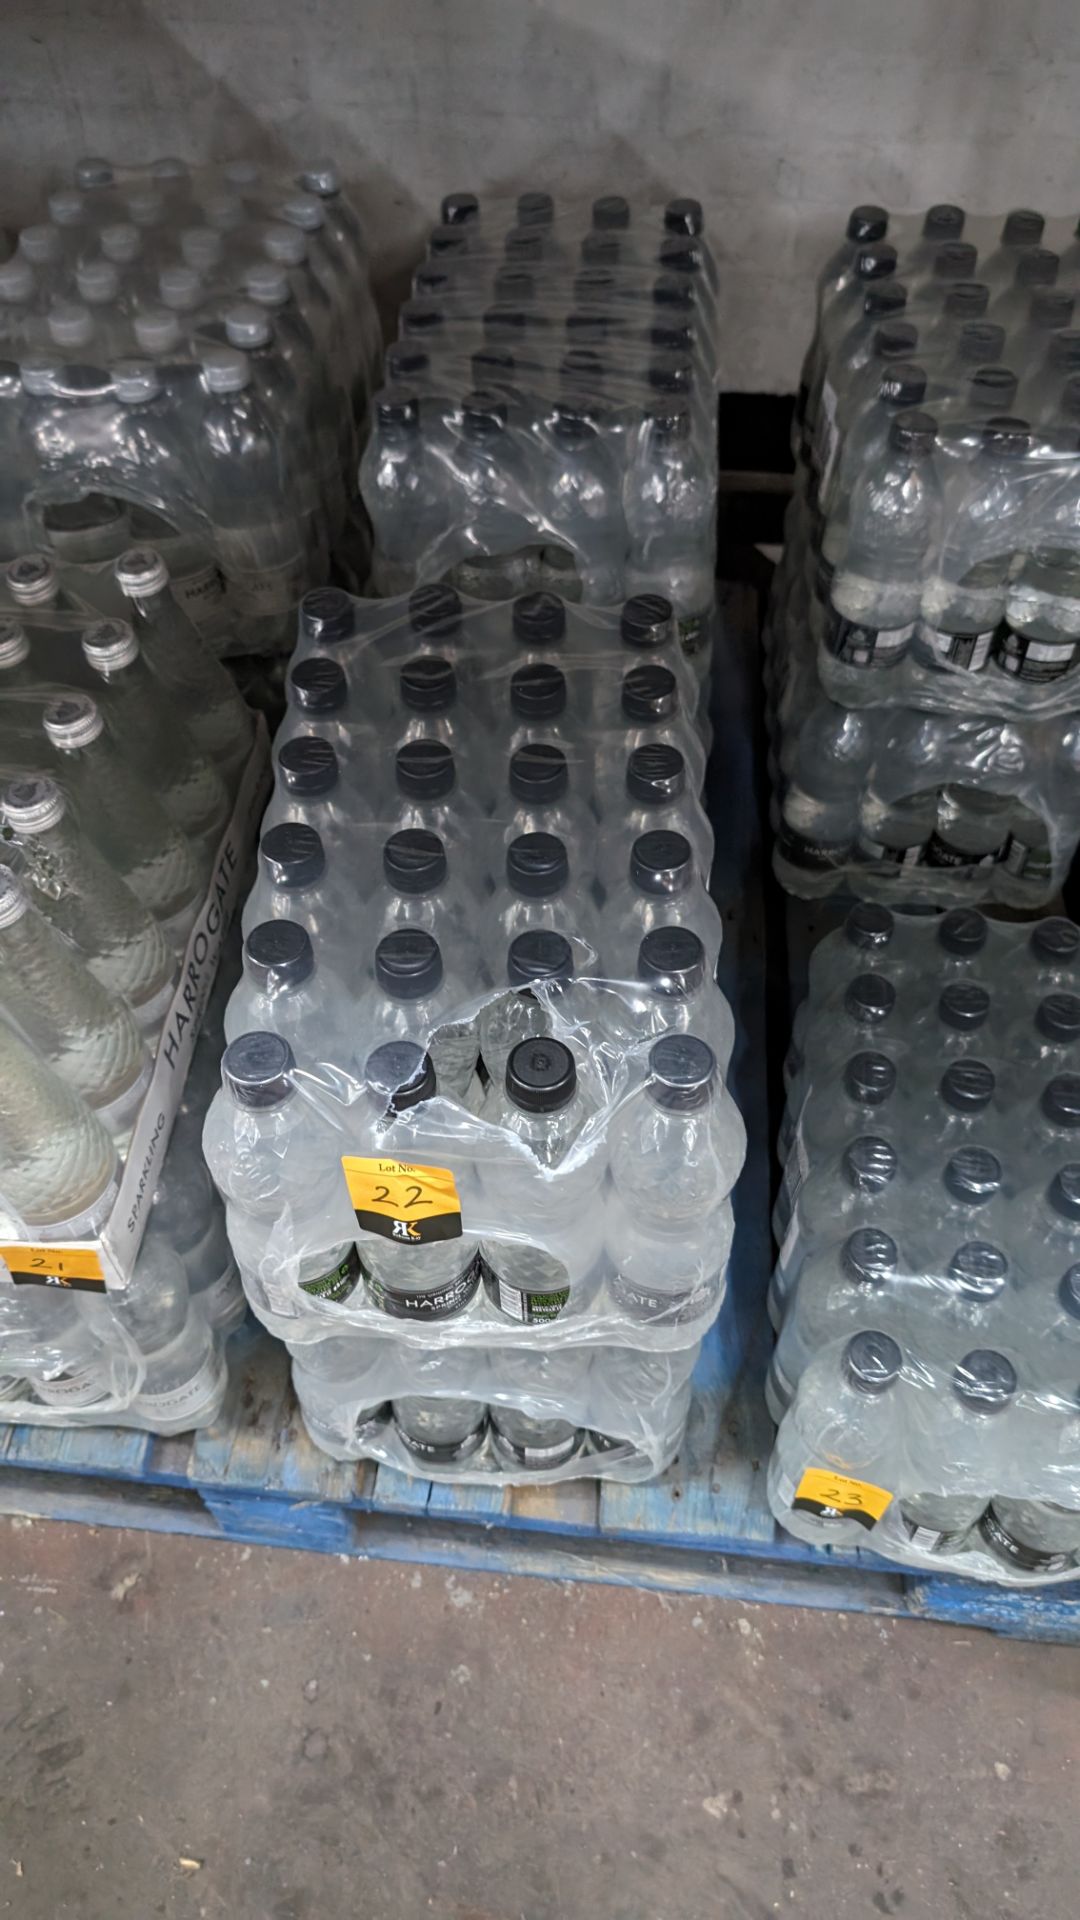 96 off 500ml bottles of Harrogate still spring water, best before date January 2026 (4 cartons)